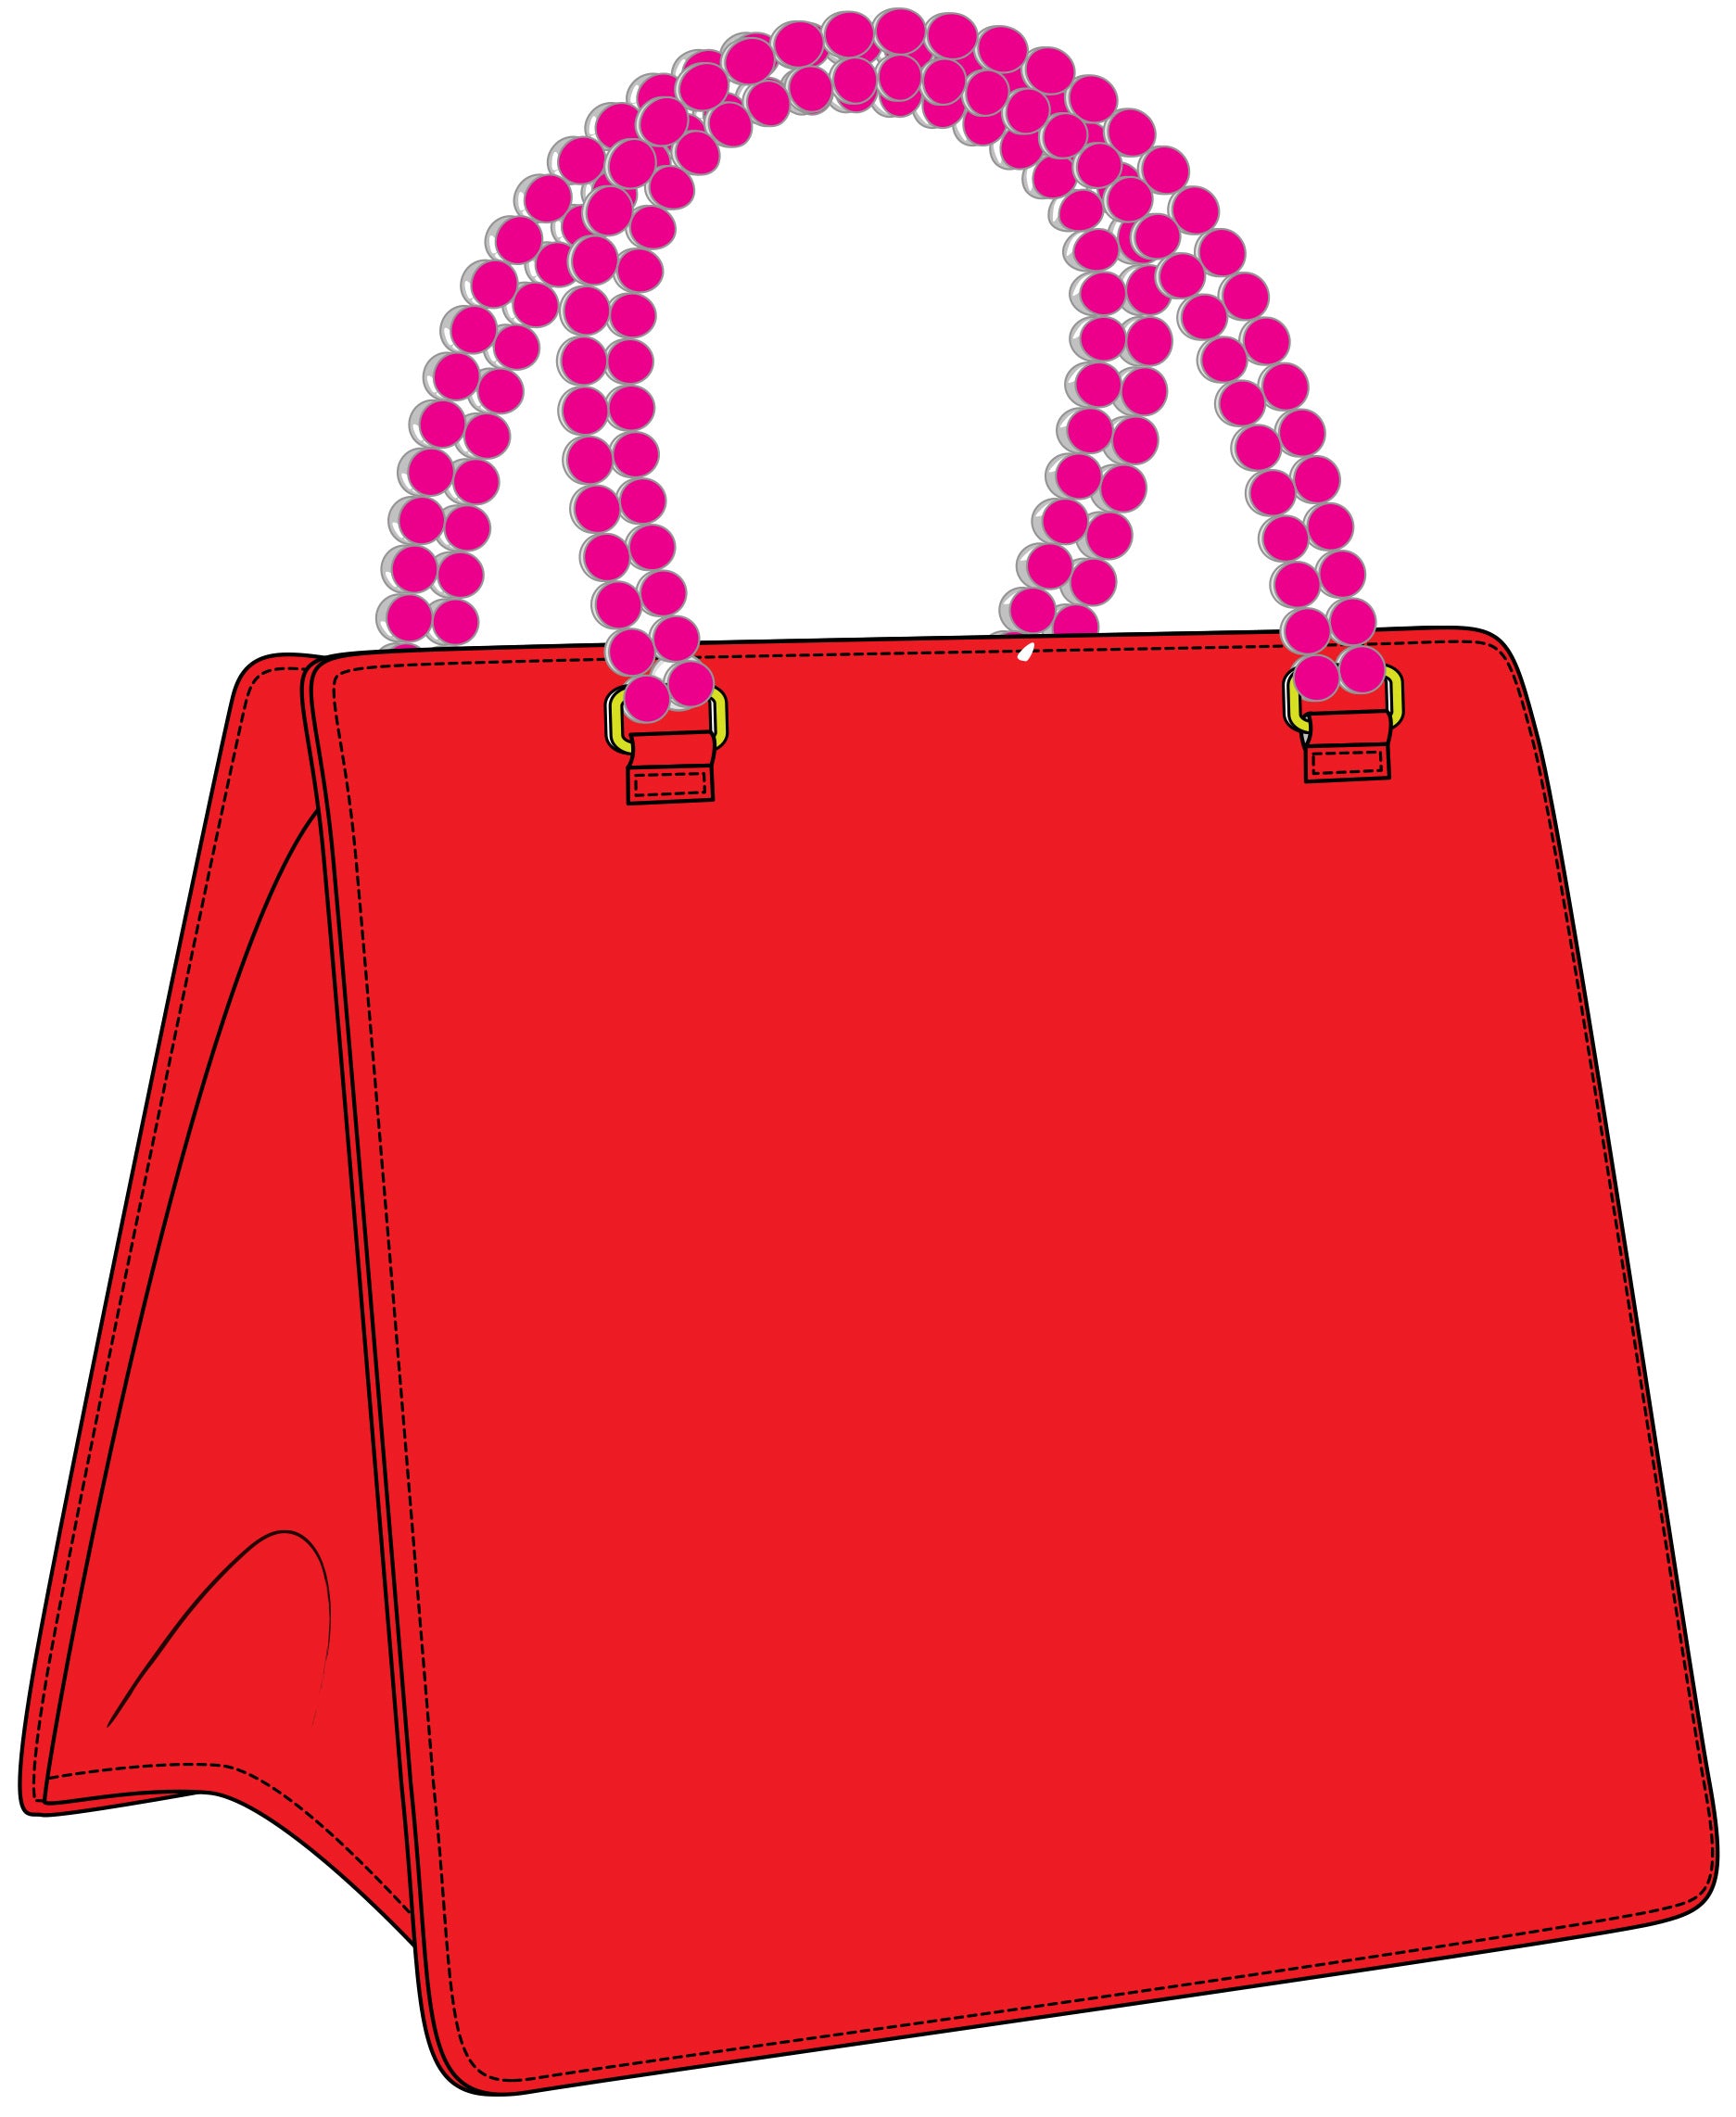 Mel Boteri's First Open Call Handbag Design Competition | Finalizing Materials 2